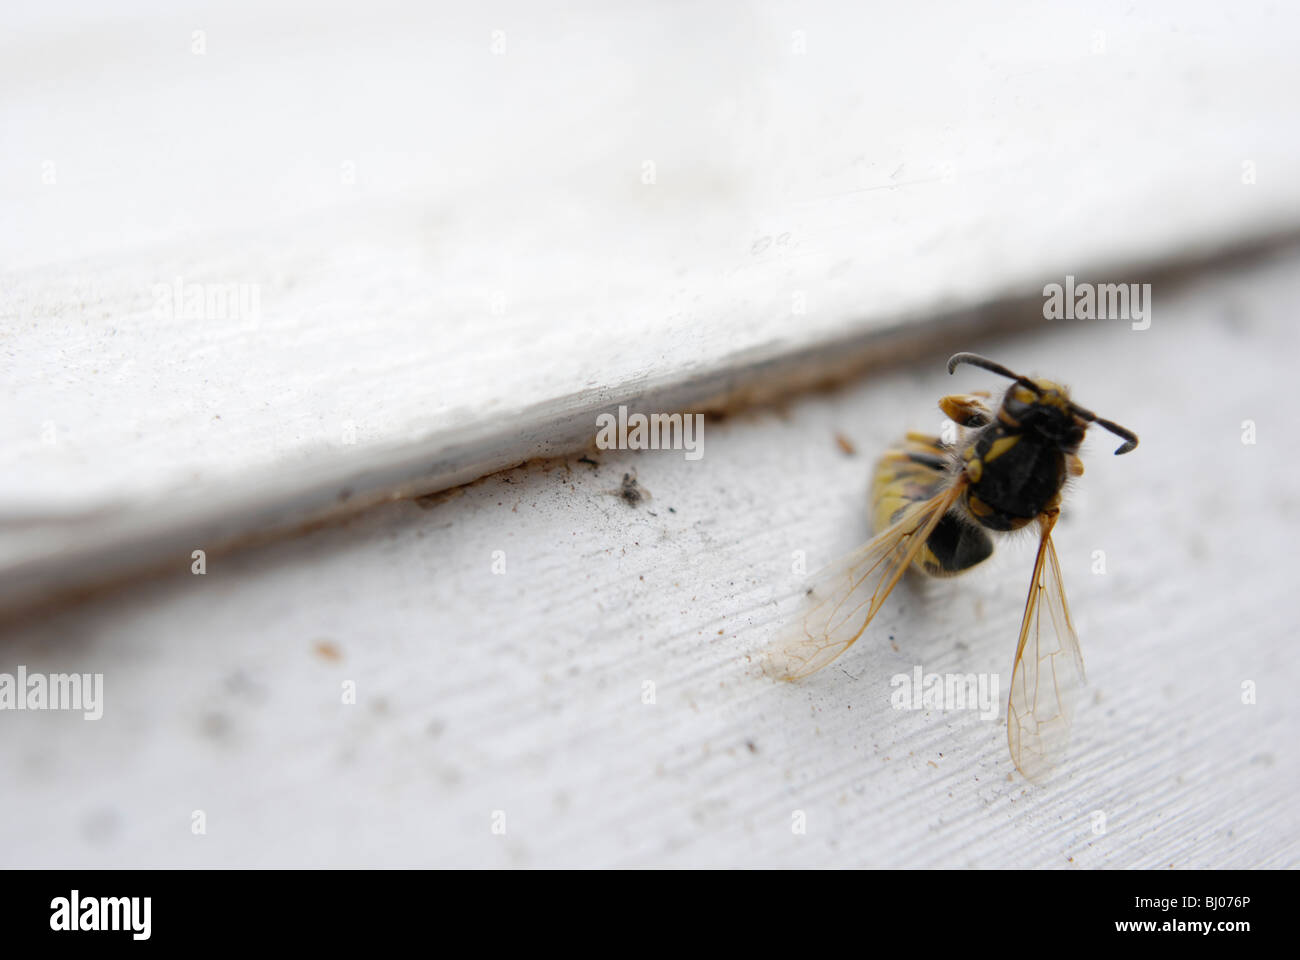 Dead wasp on window sill Stock Photo